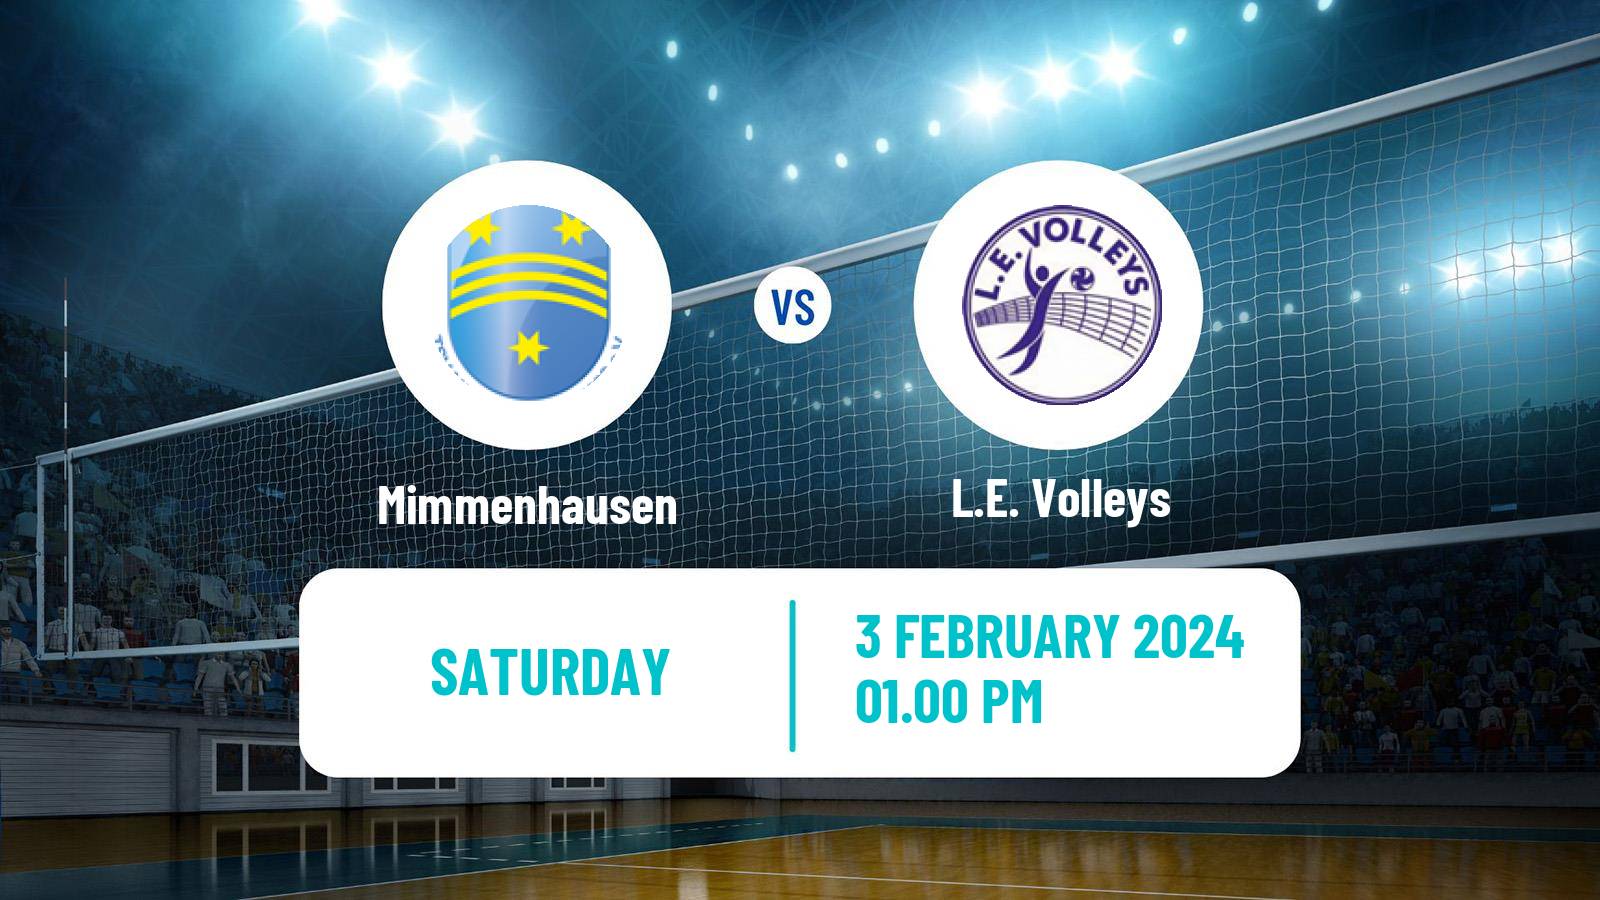 Volleyball German 2 Bundesliga South Volleyball Mimmenhausen - L.E. Volleys